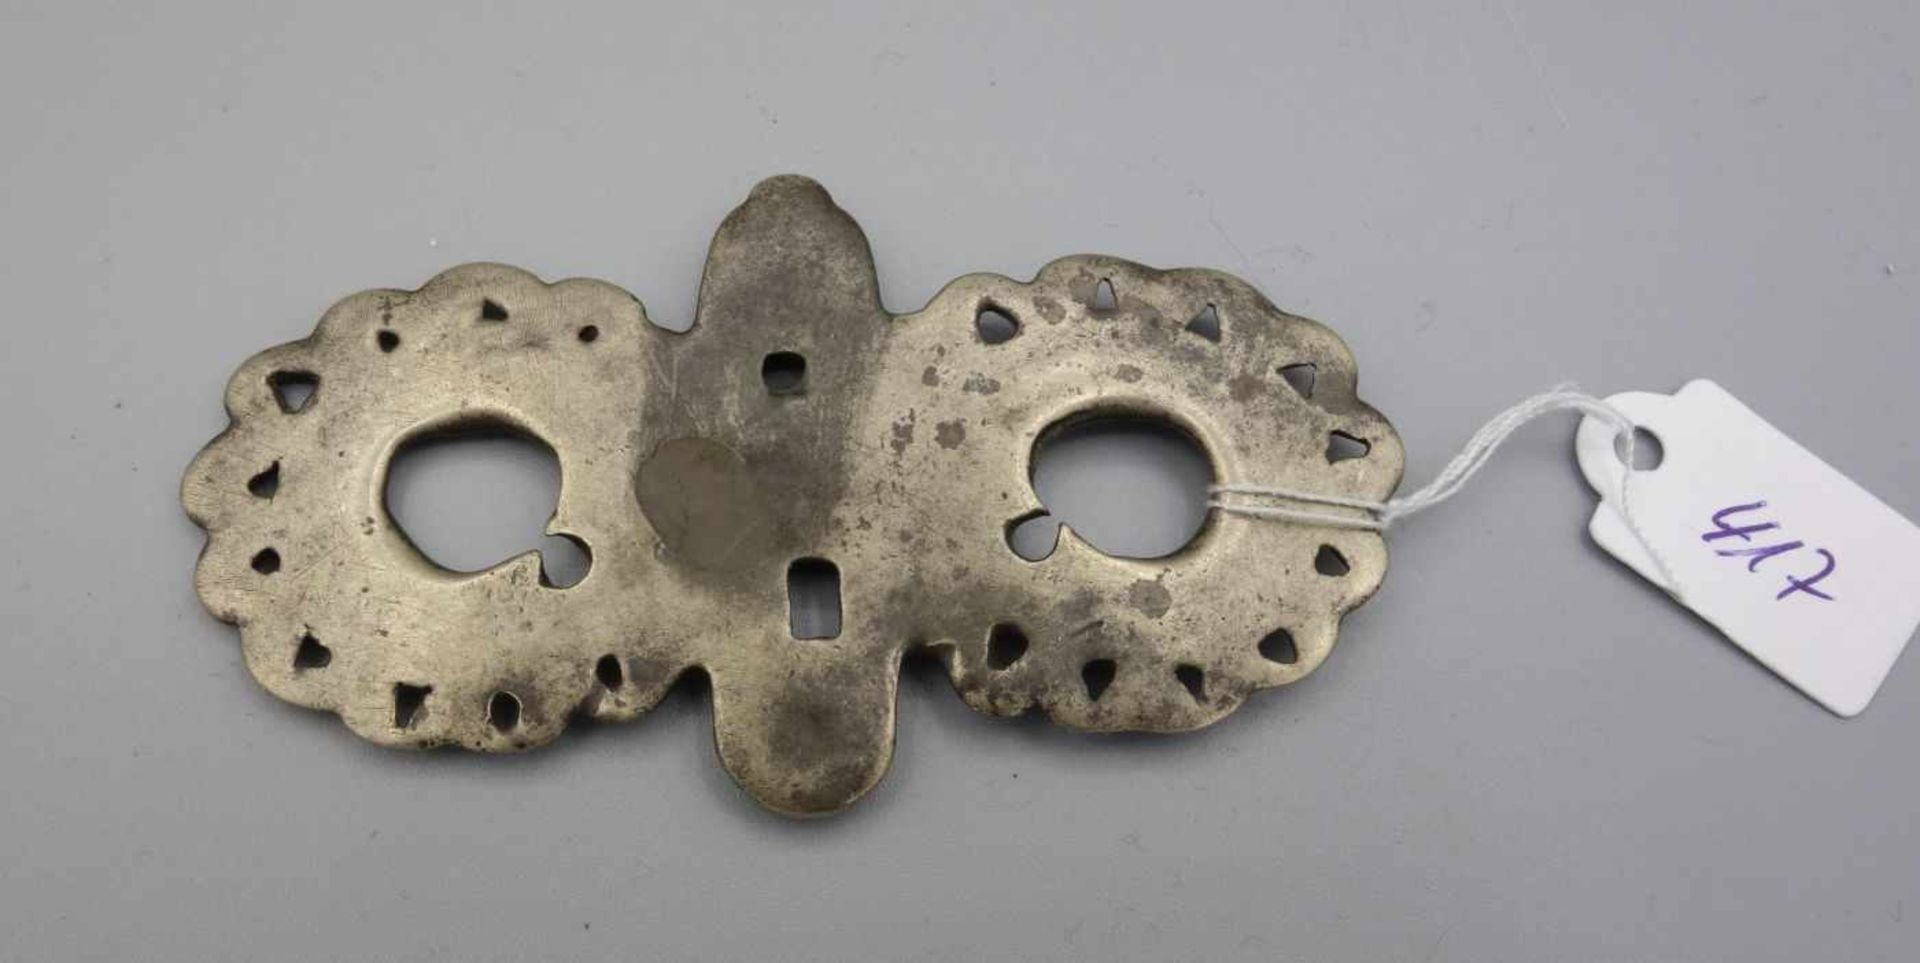 BERBERSCHMUCK DER TUAREG: Silberne Spange / brooch, Marokko, 20. Jh., Silber, Gewicht: 28,01 g. - Image 2 of 2